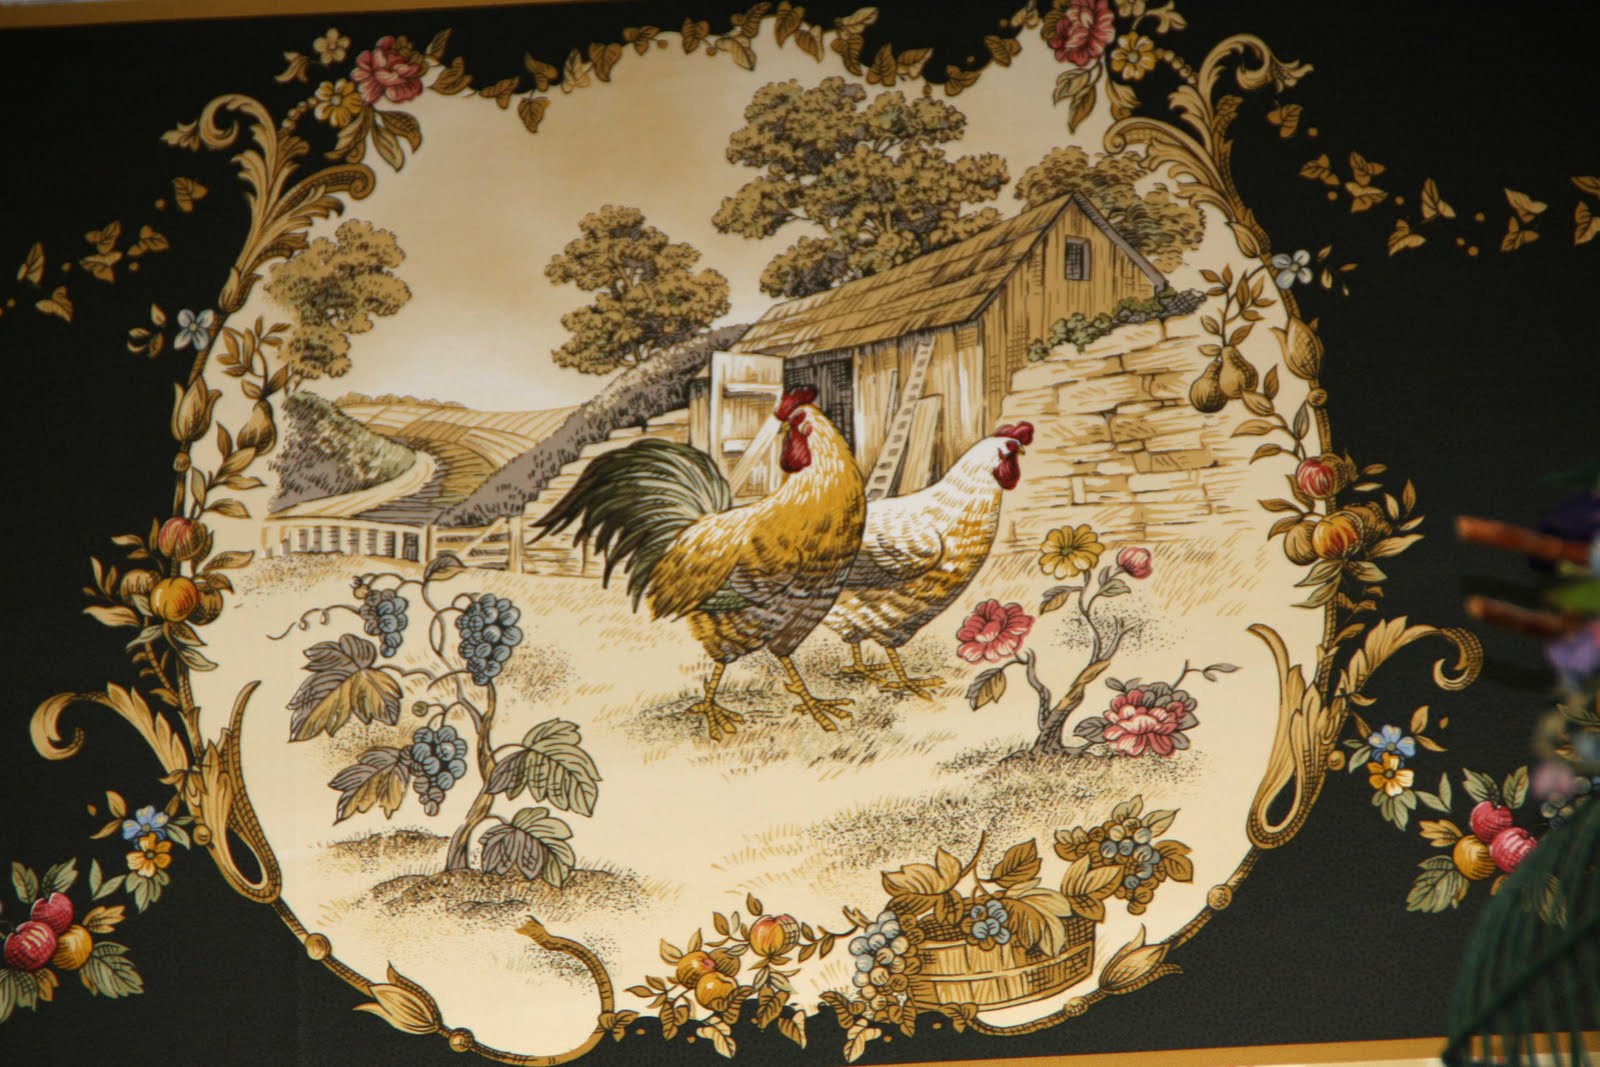 wallpaper borders for kitchen,chicken,galliformes,rooster,dishware,textile